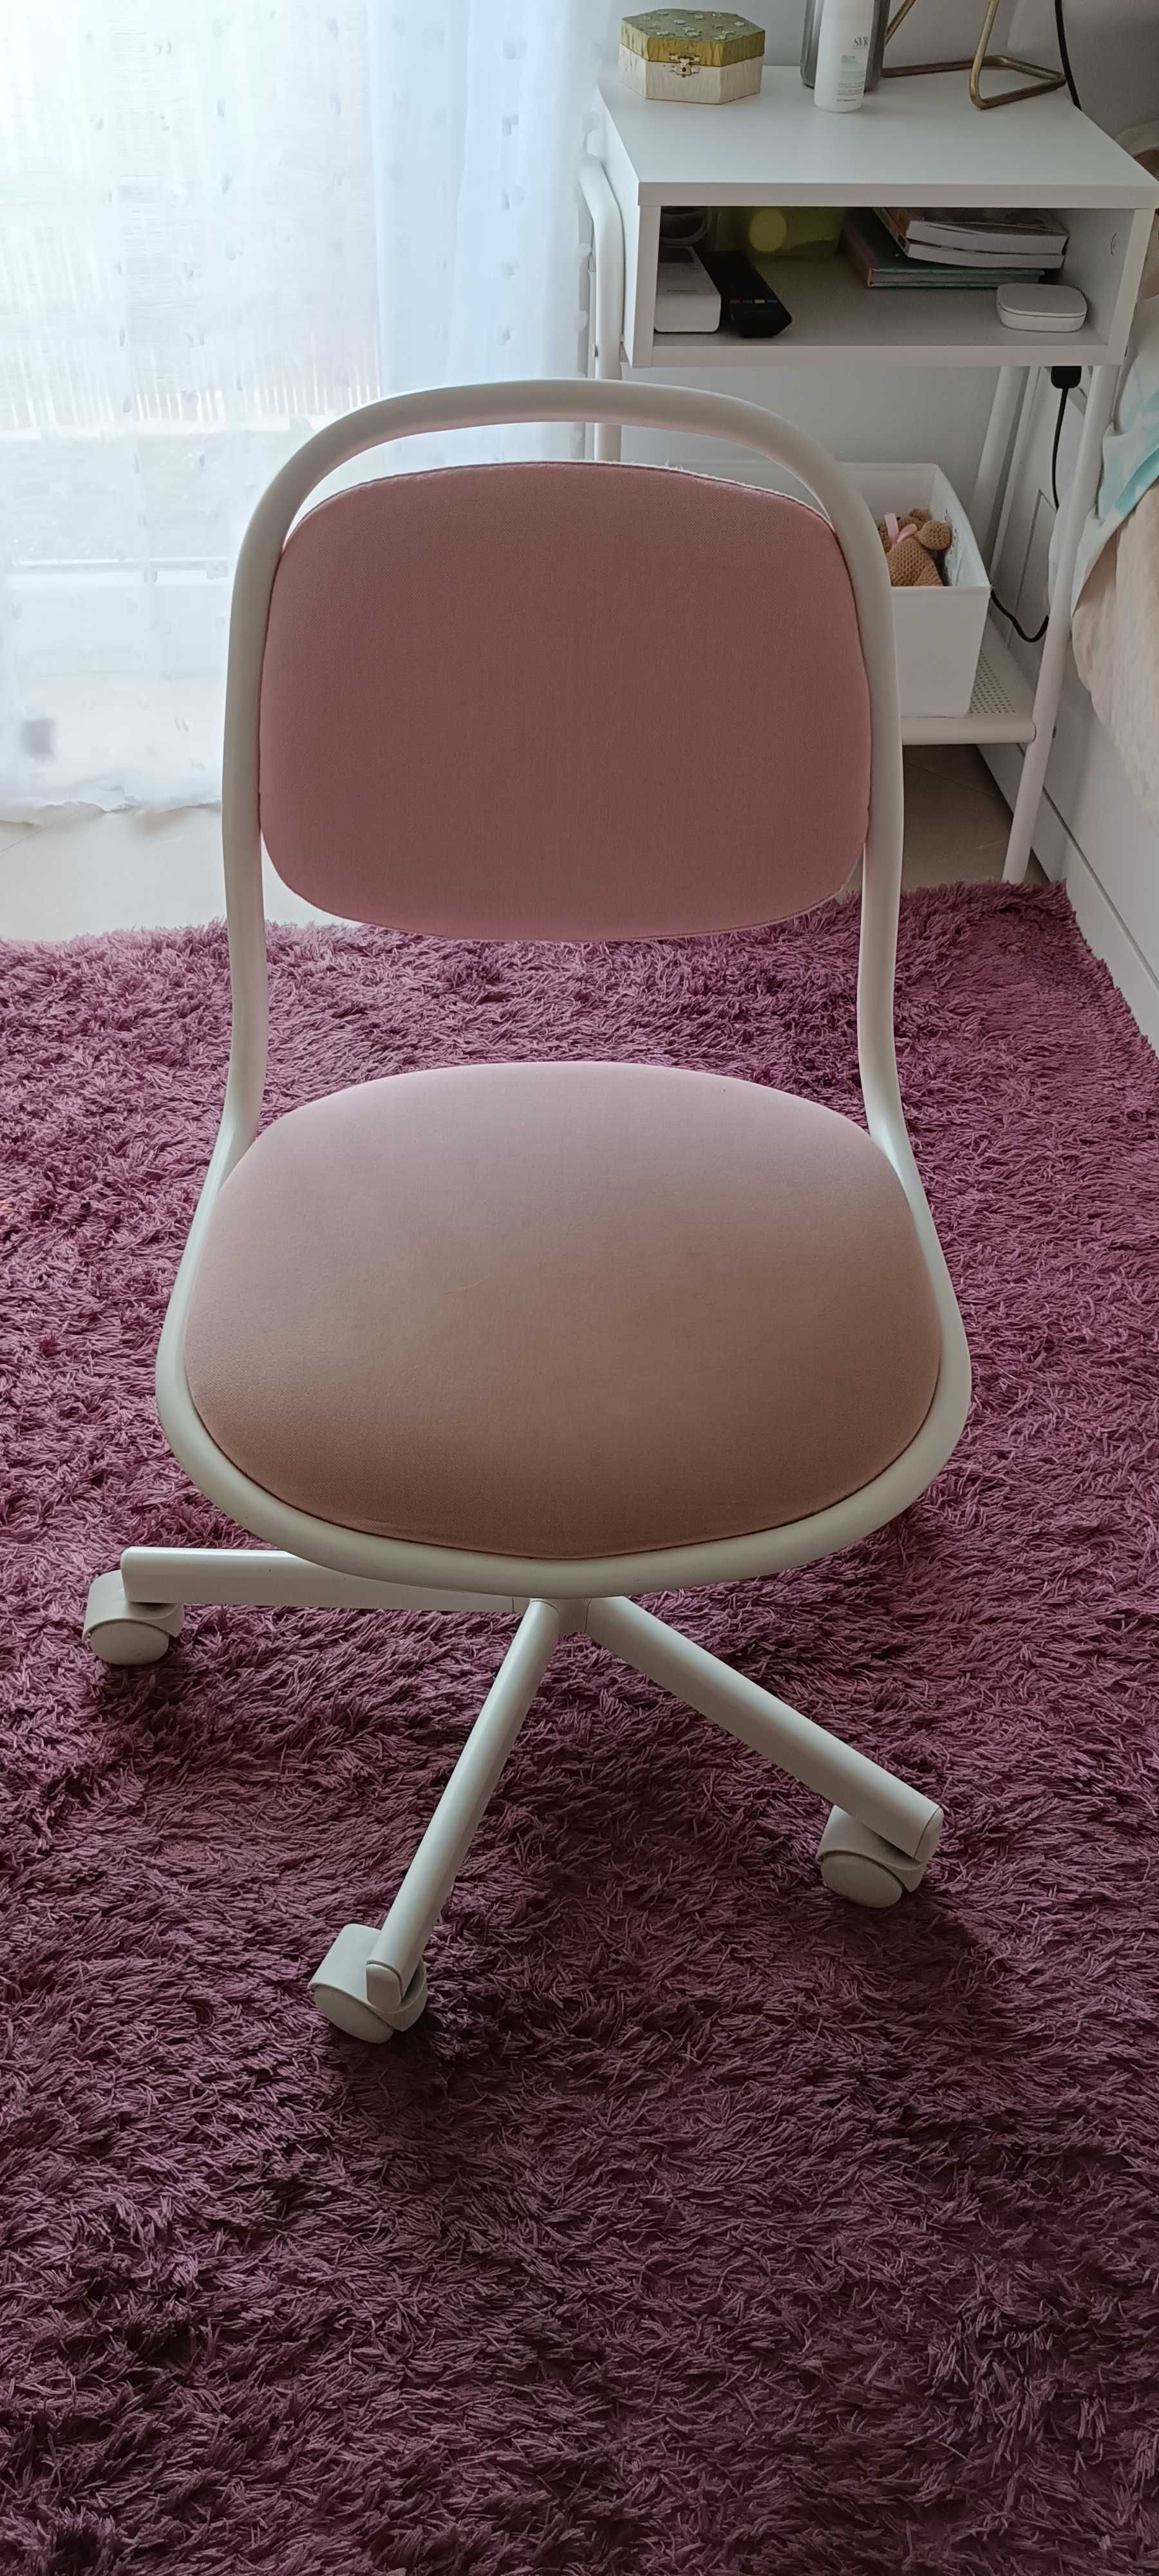 Cadeira giratória ÖRFJÄLL (IKEA) - Branca/Cinza clara